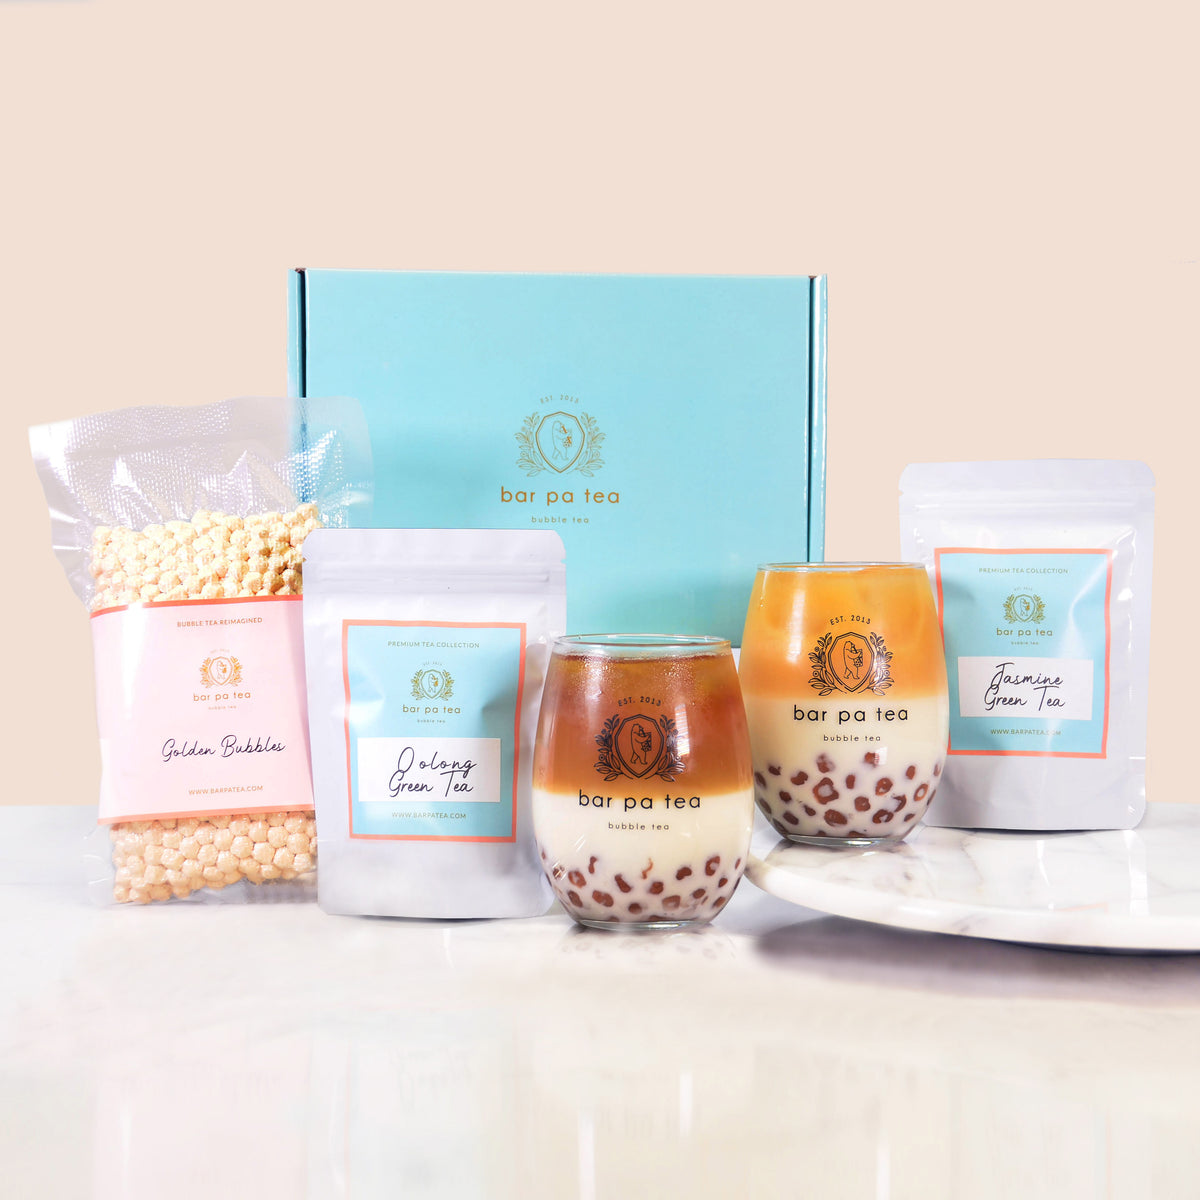 Premium Bubble Tea Kit, Jasmine & Oolong Green Tea Gift Set (Dylan Kit)  Boba Kit - Vegan Friendly